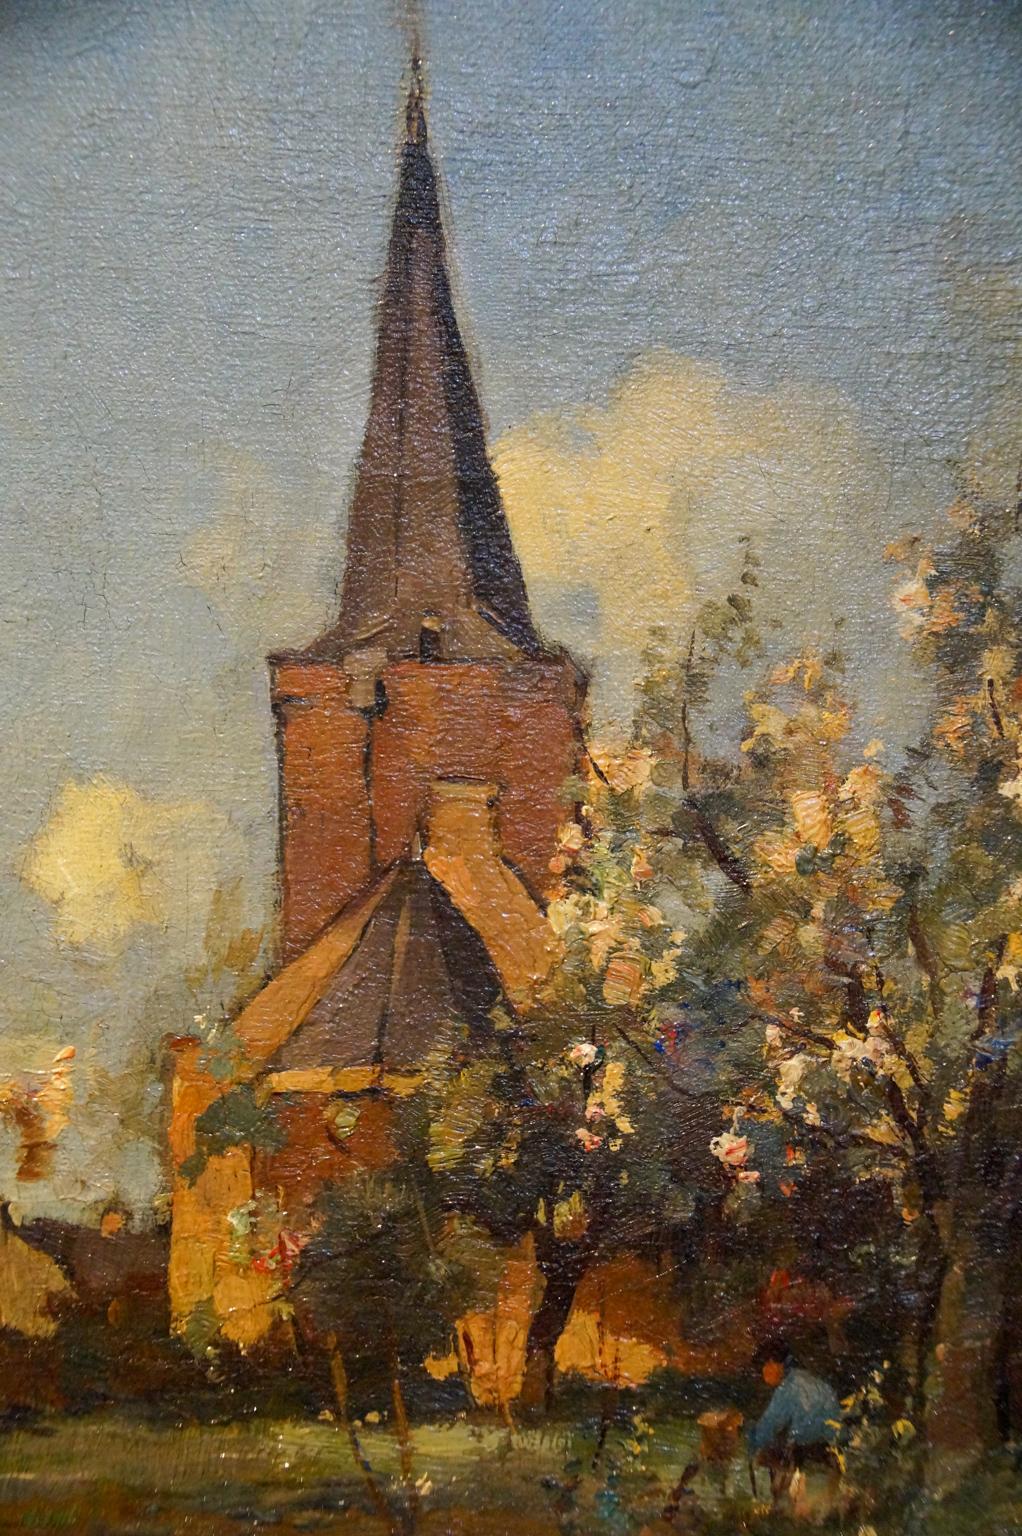 Dutch View on Kortenhoef 'Netherlands', Aris Knikker, 1887-1962, The Hague